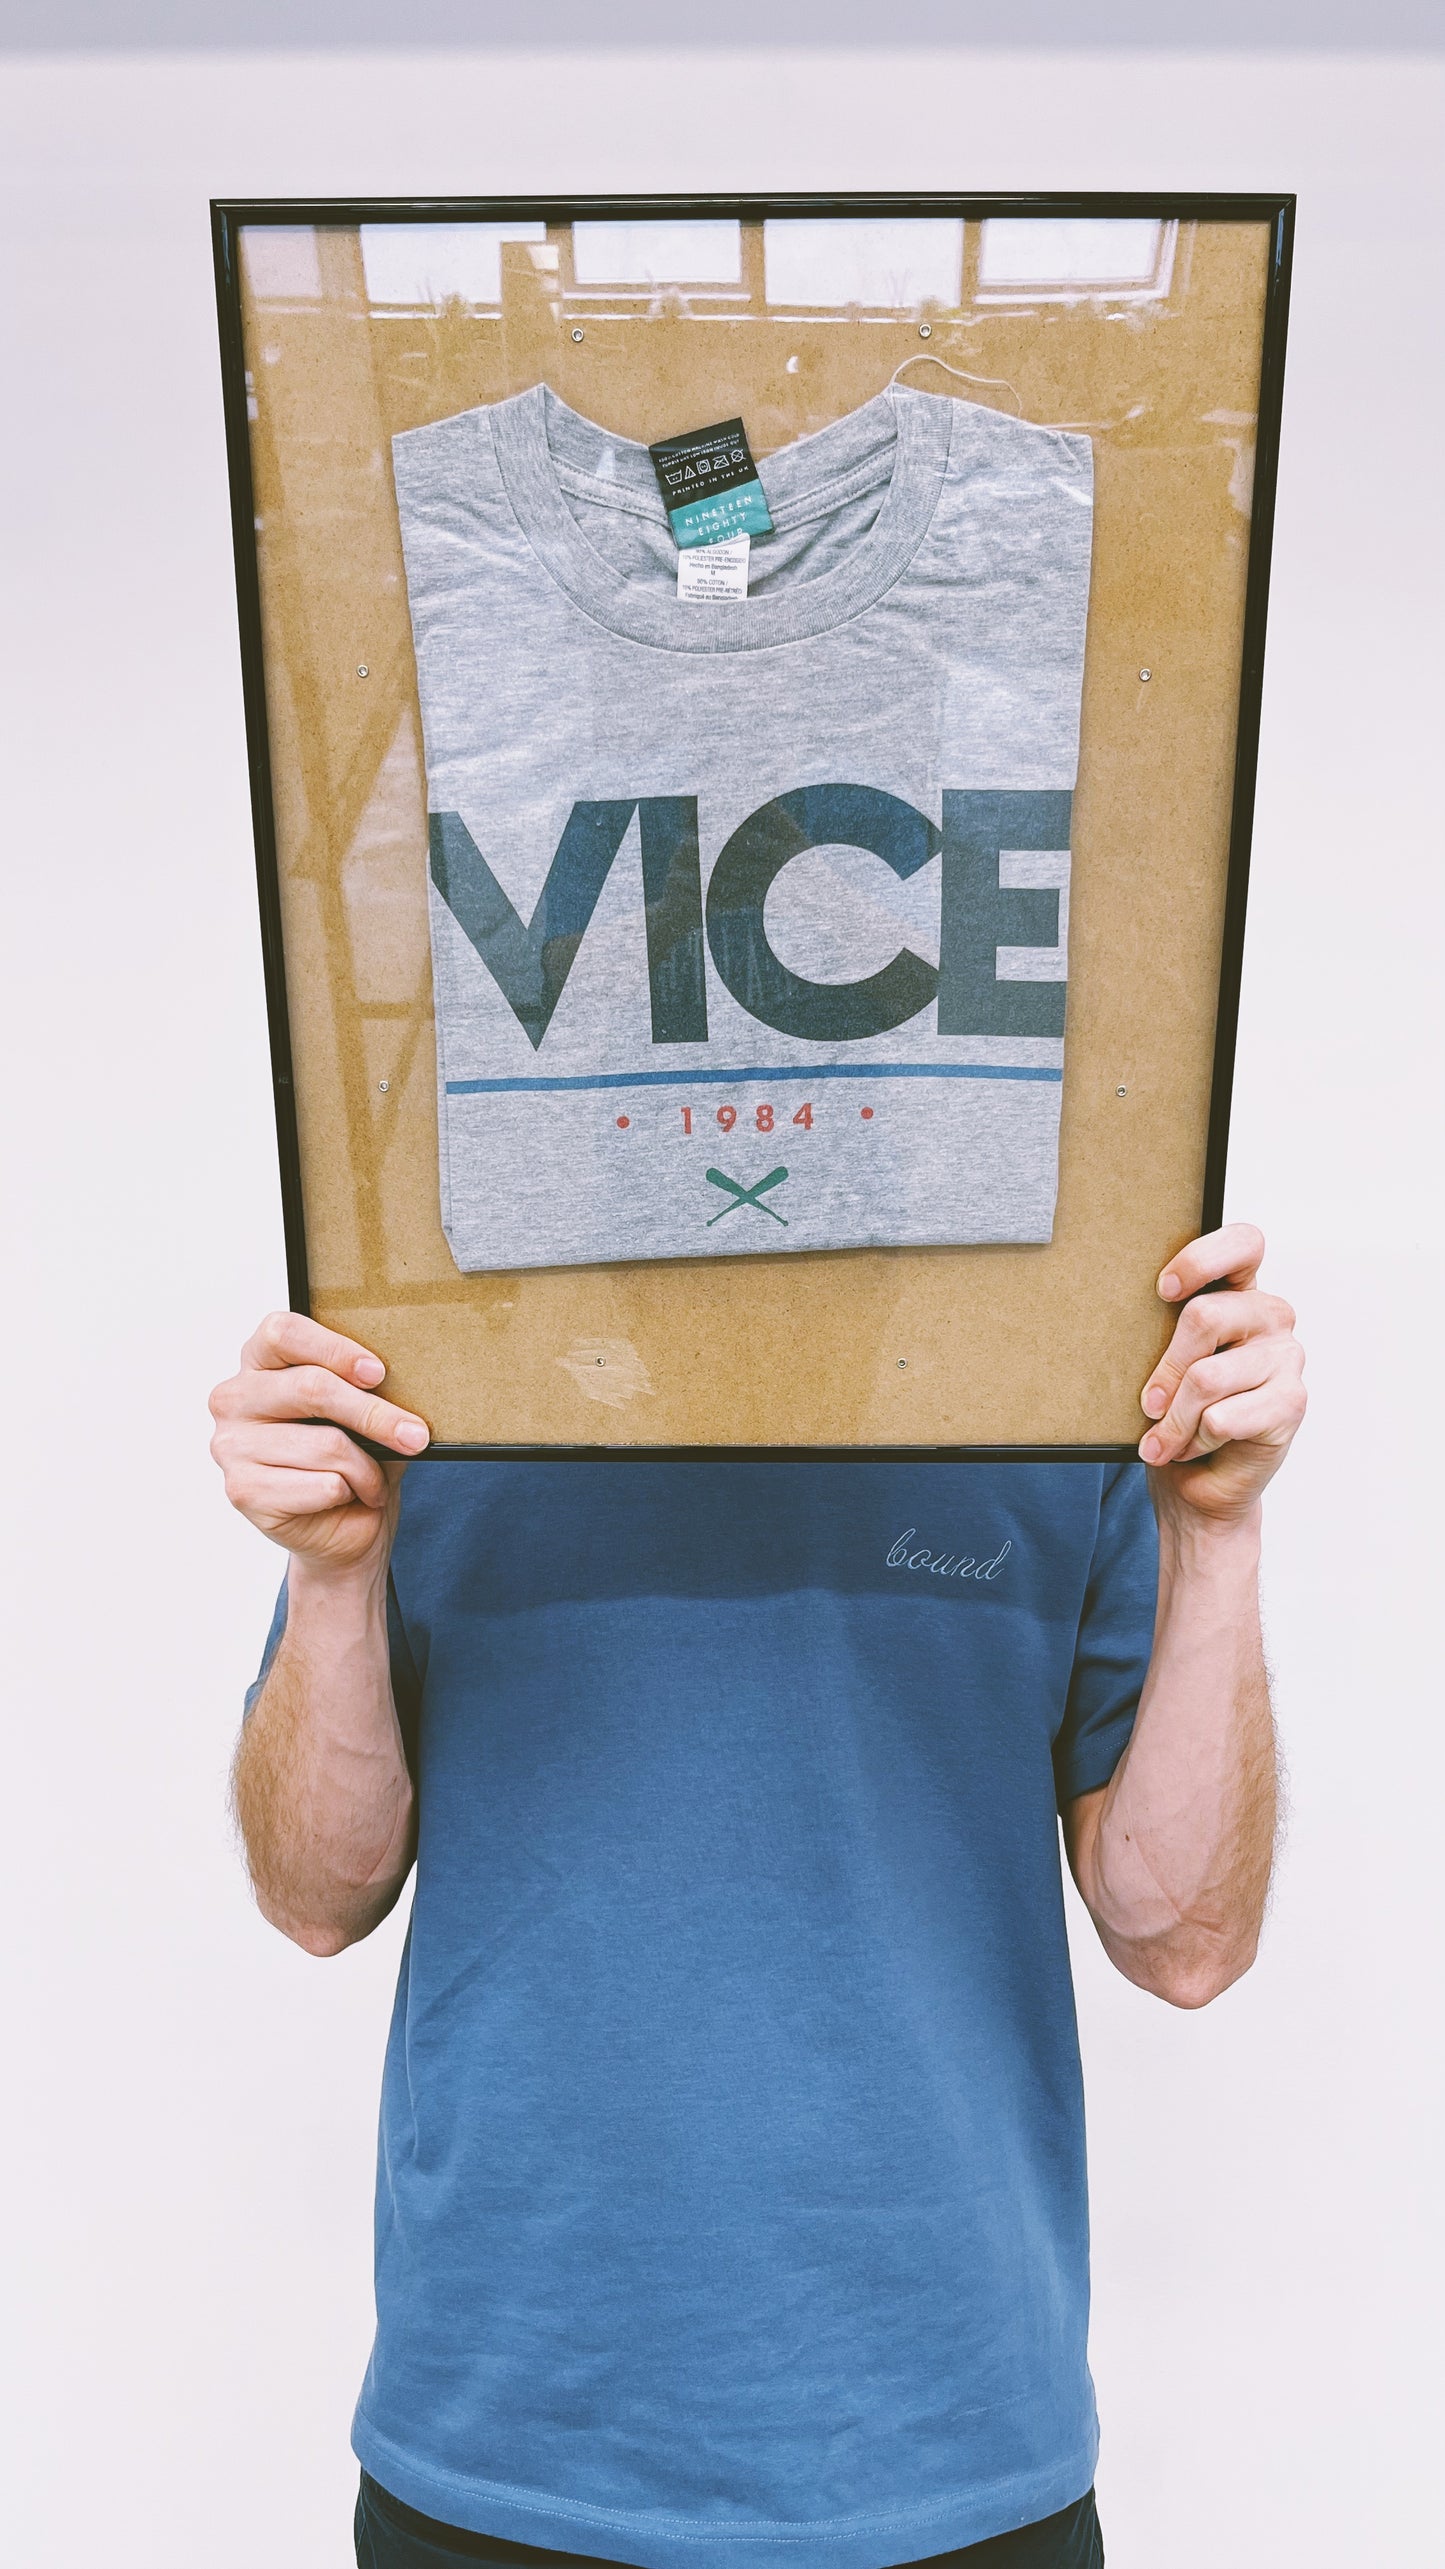 Vice 84 'Sports Tee - Grey *100K CLUB*